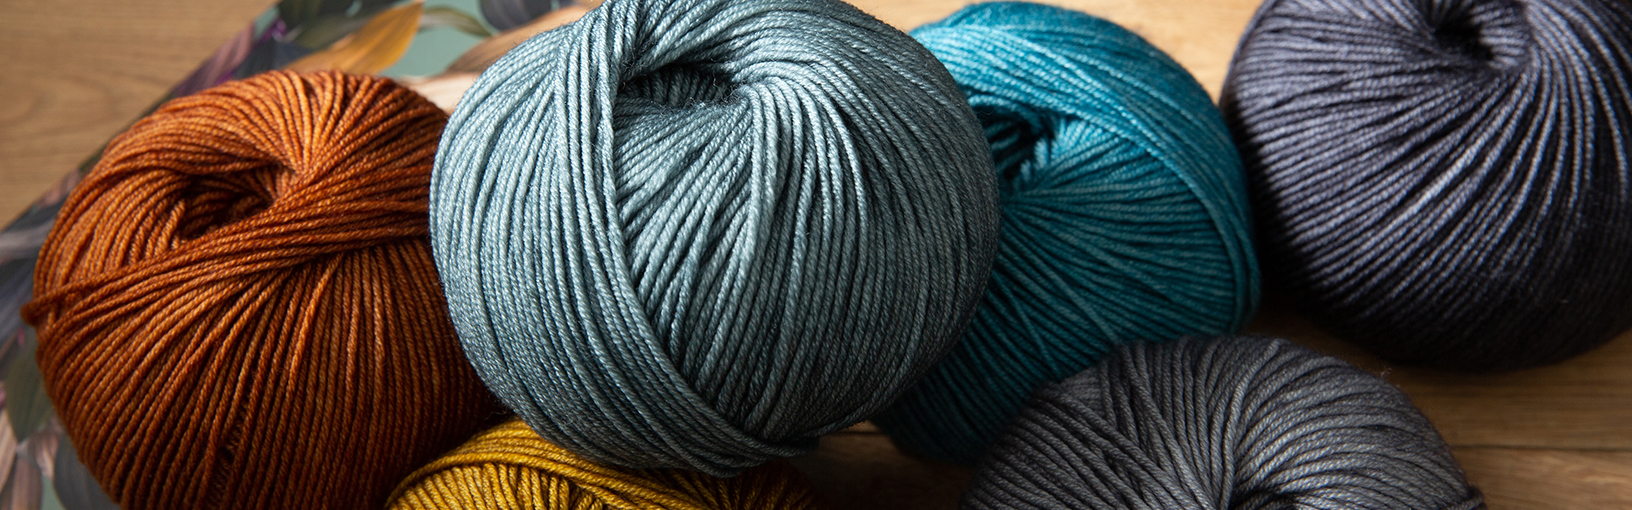 High quality yarns for knitting, crocheting & felting Lana Grossa Yarns | Sock yarns | Socktober